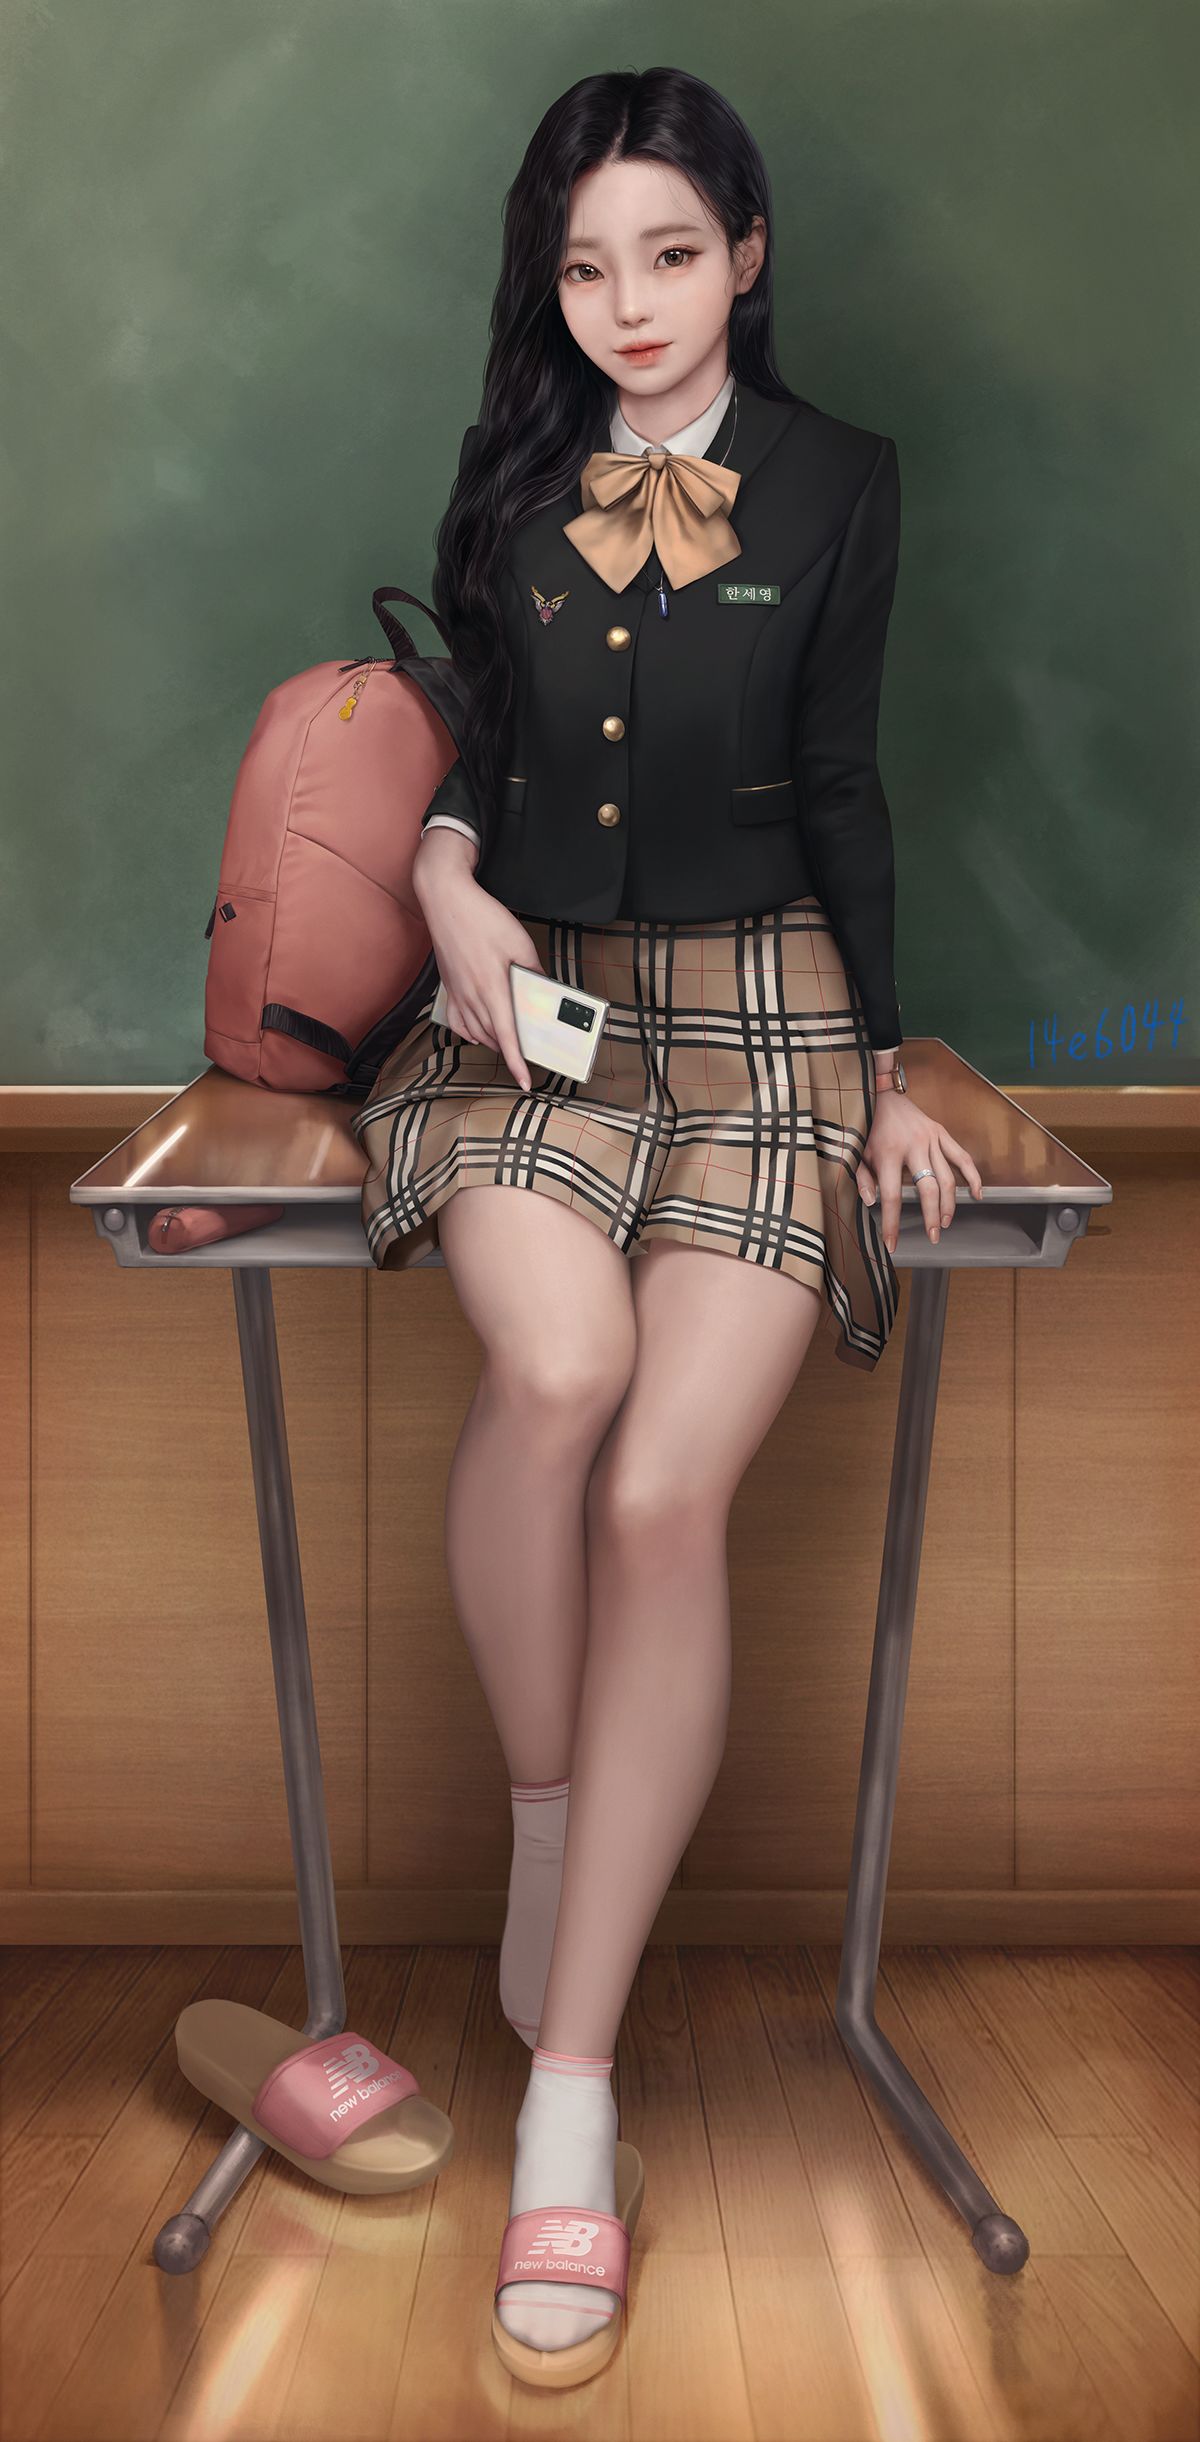 School girl